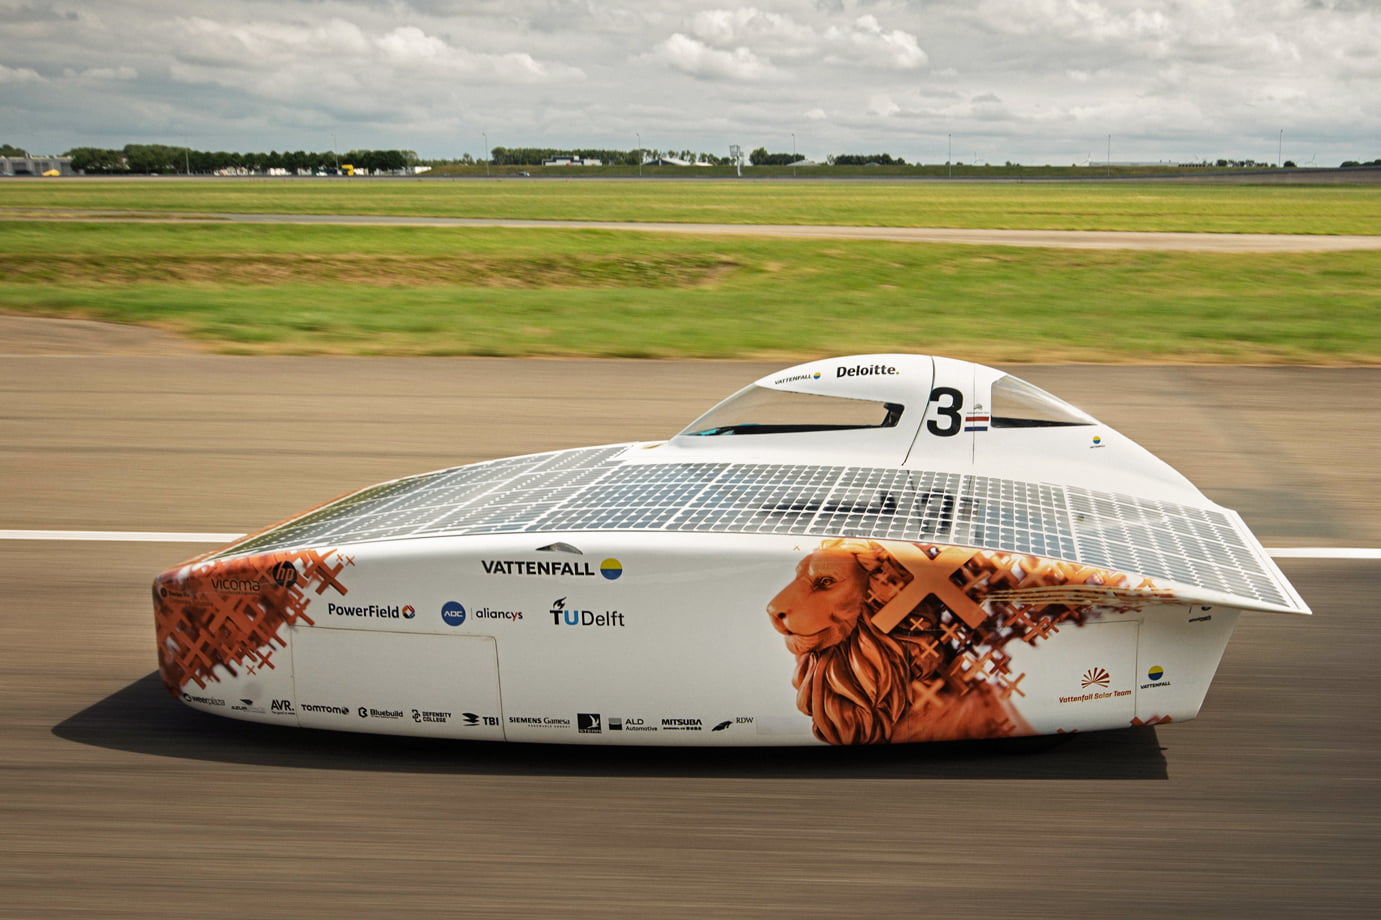 Solar car TU Delft 'sails' thanks to new design on wind…